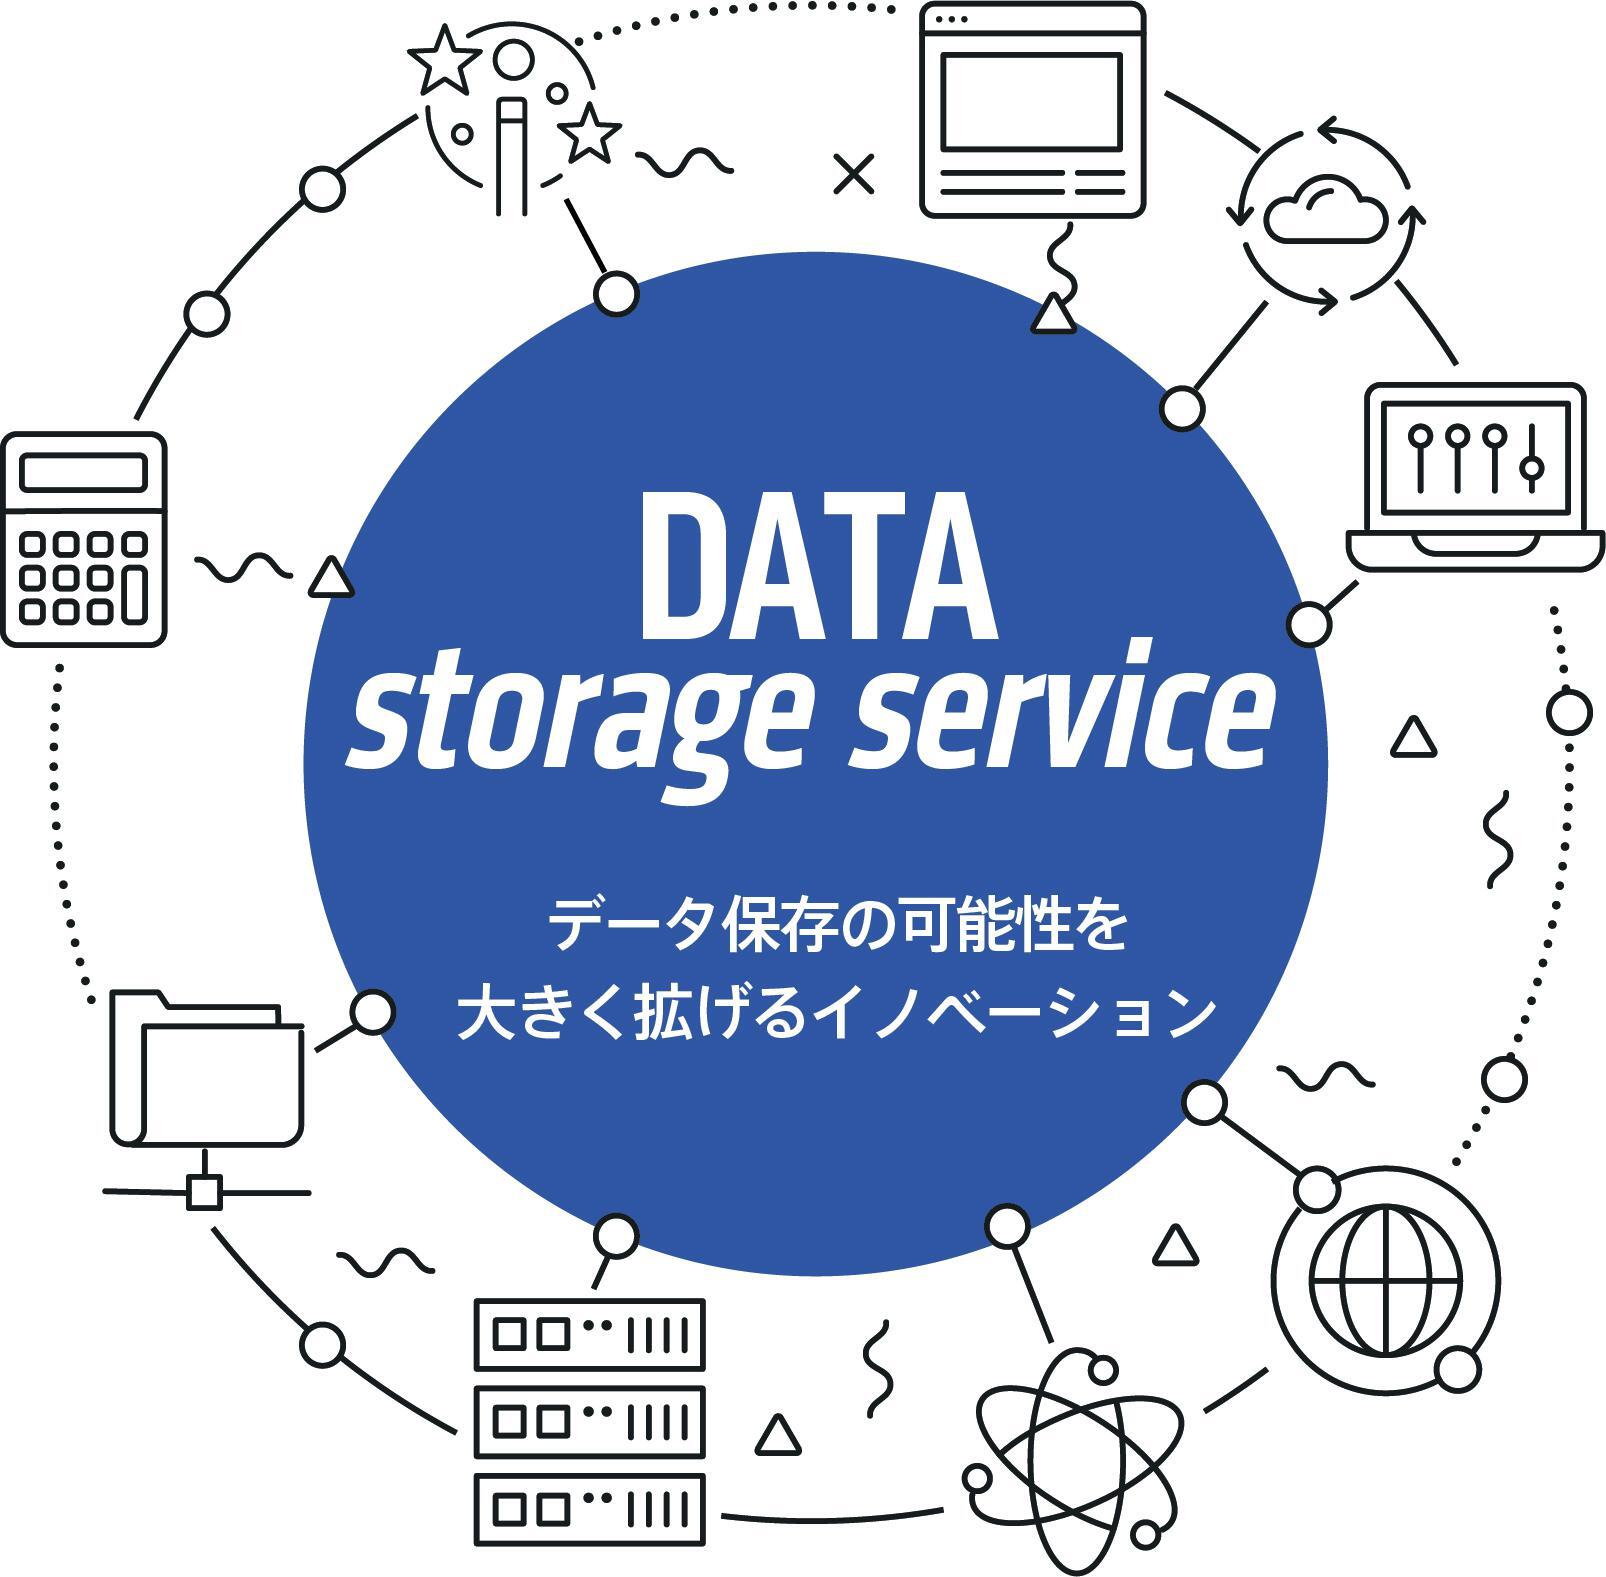 Dxの進展により日々増加していく膨大なデータの保存 保管に 磁気テープを活用したデータコピーサービス Data Storage Service を開始 株式会社きもとのプレスリリース